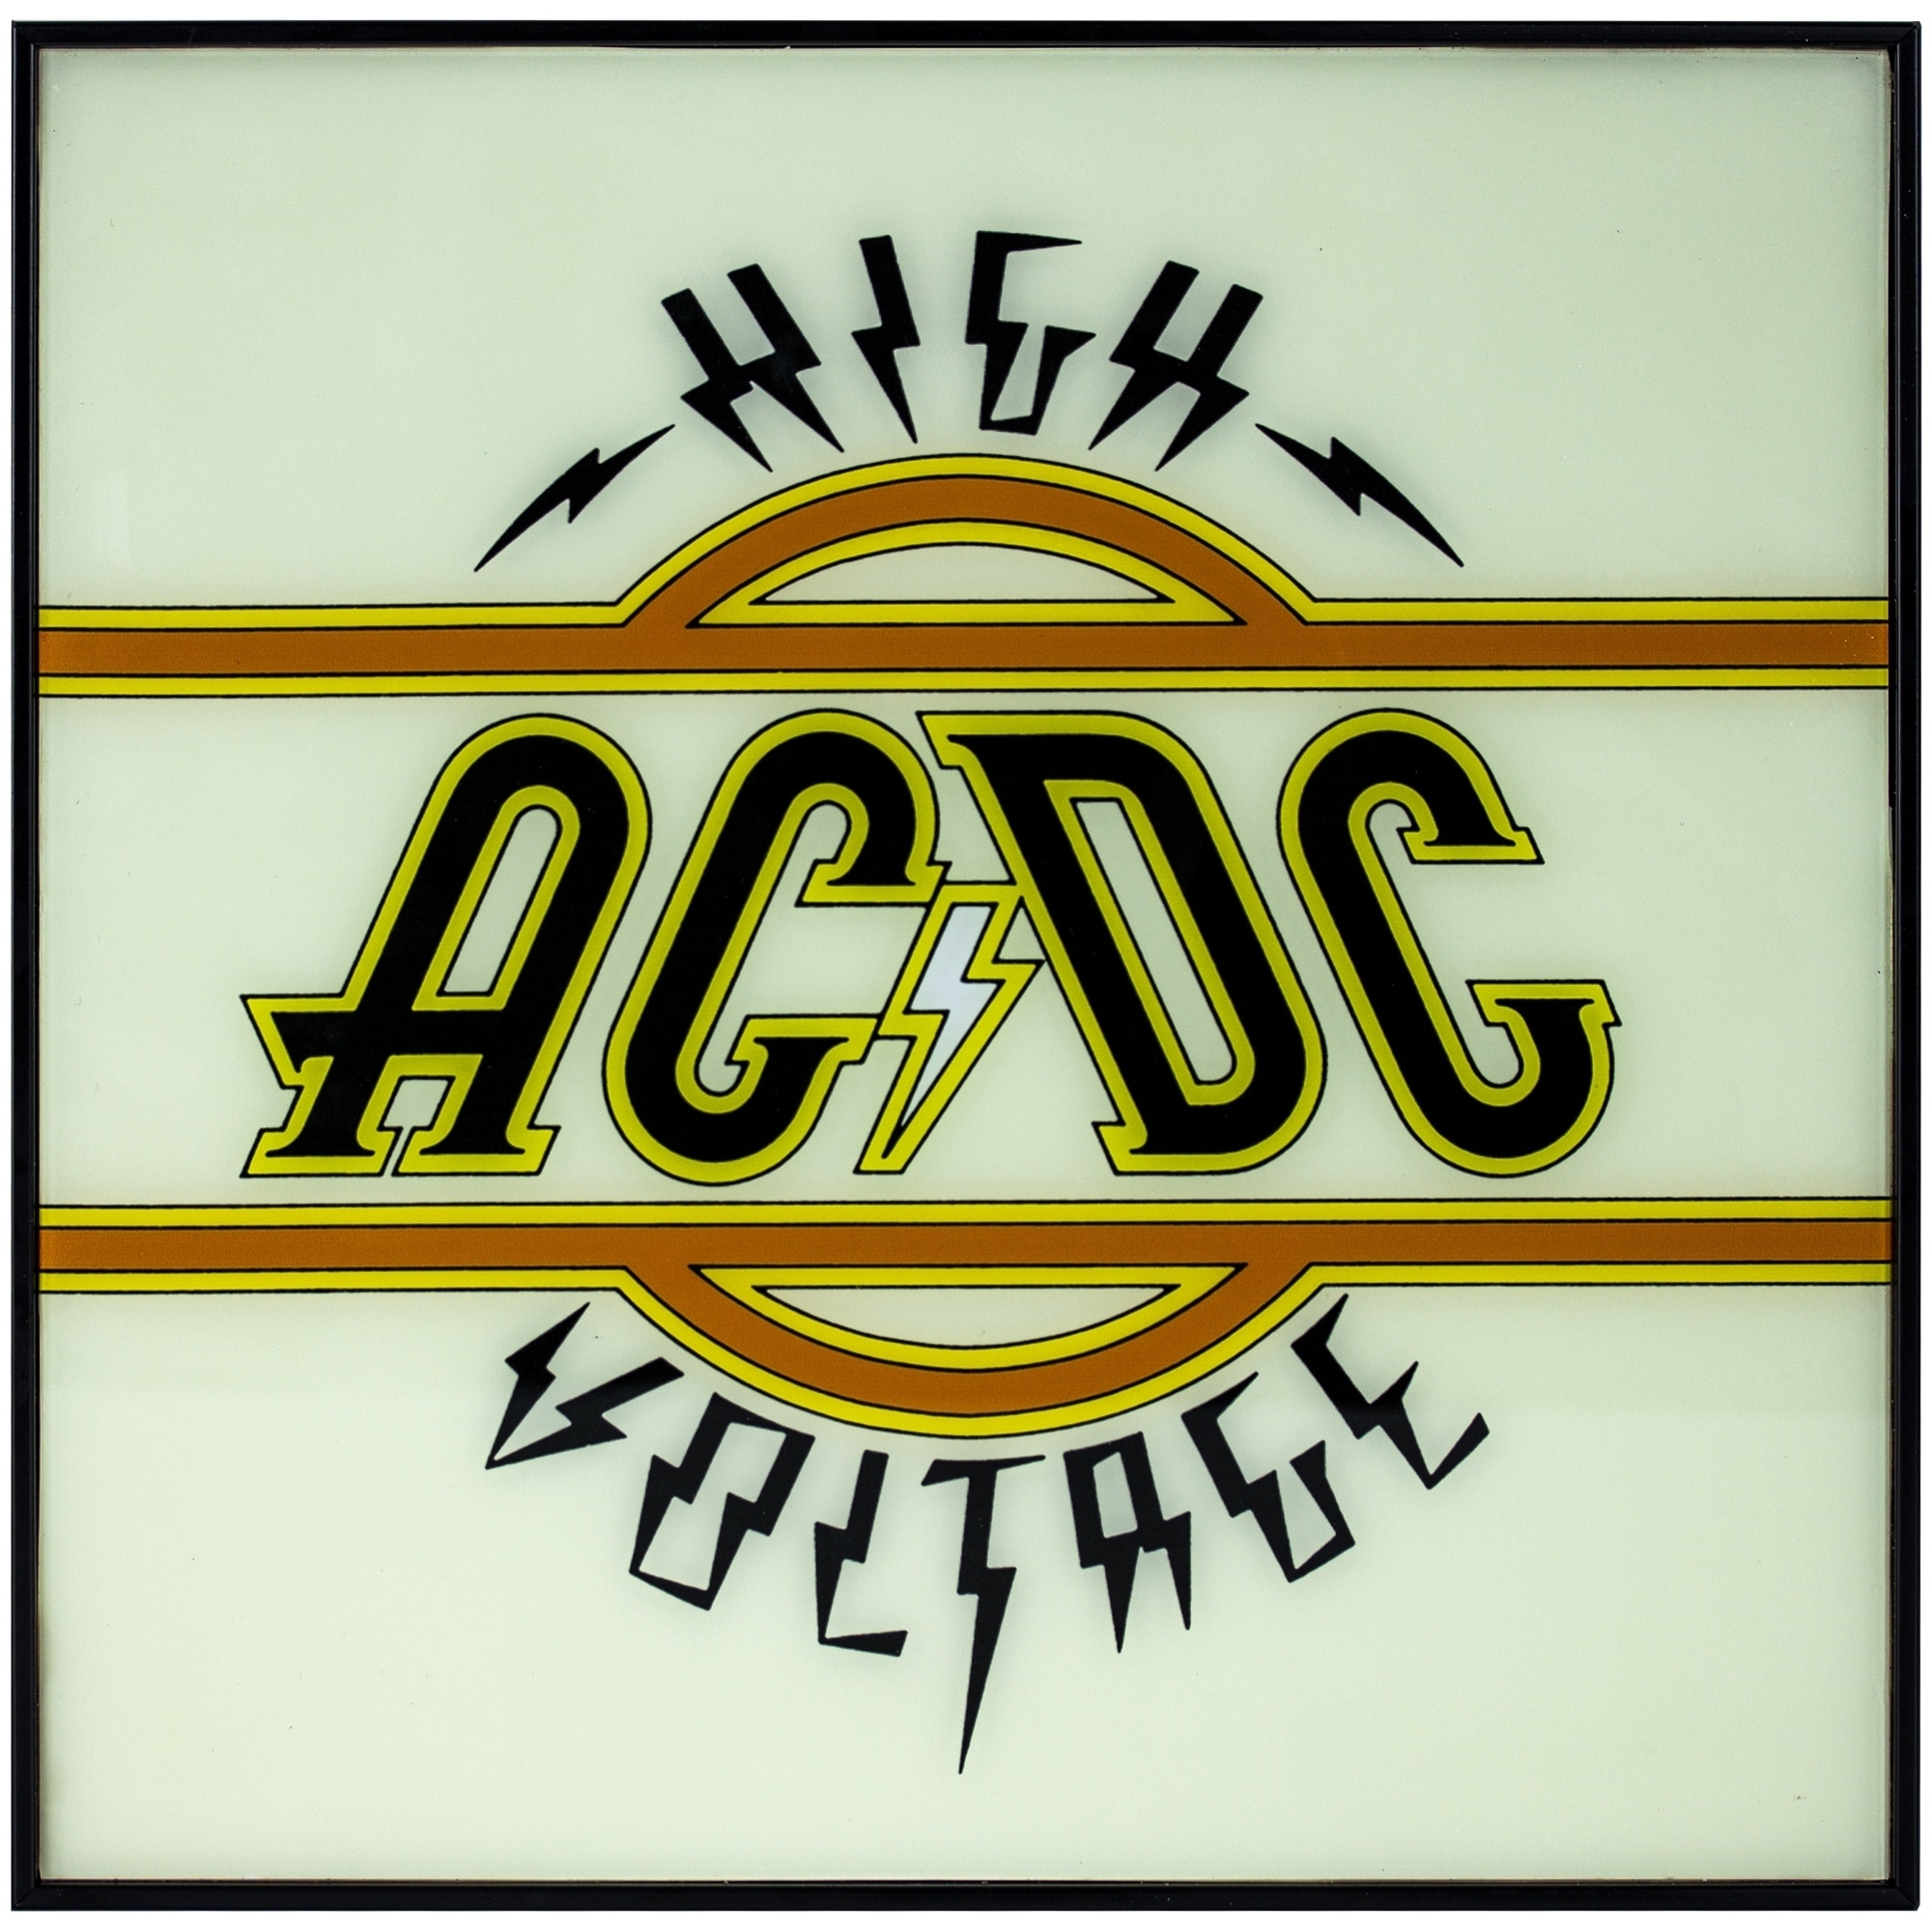 Ac dc high. AC DC High Voltage обложка. AC DC 1975. AC DC High Voltage 1975. AC DC Хай Вольтаж.